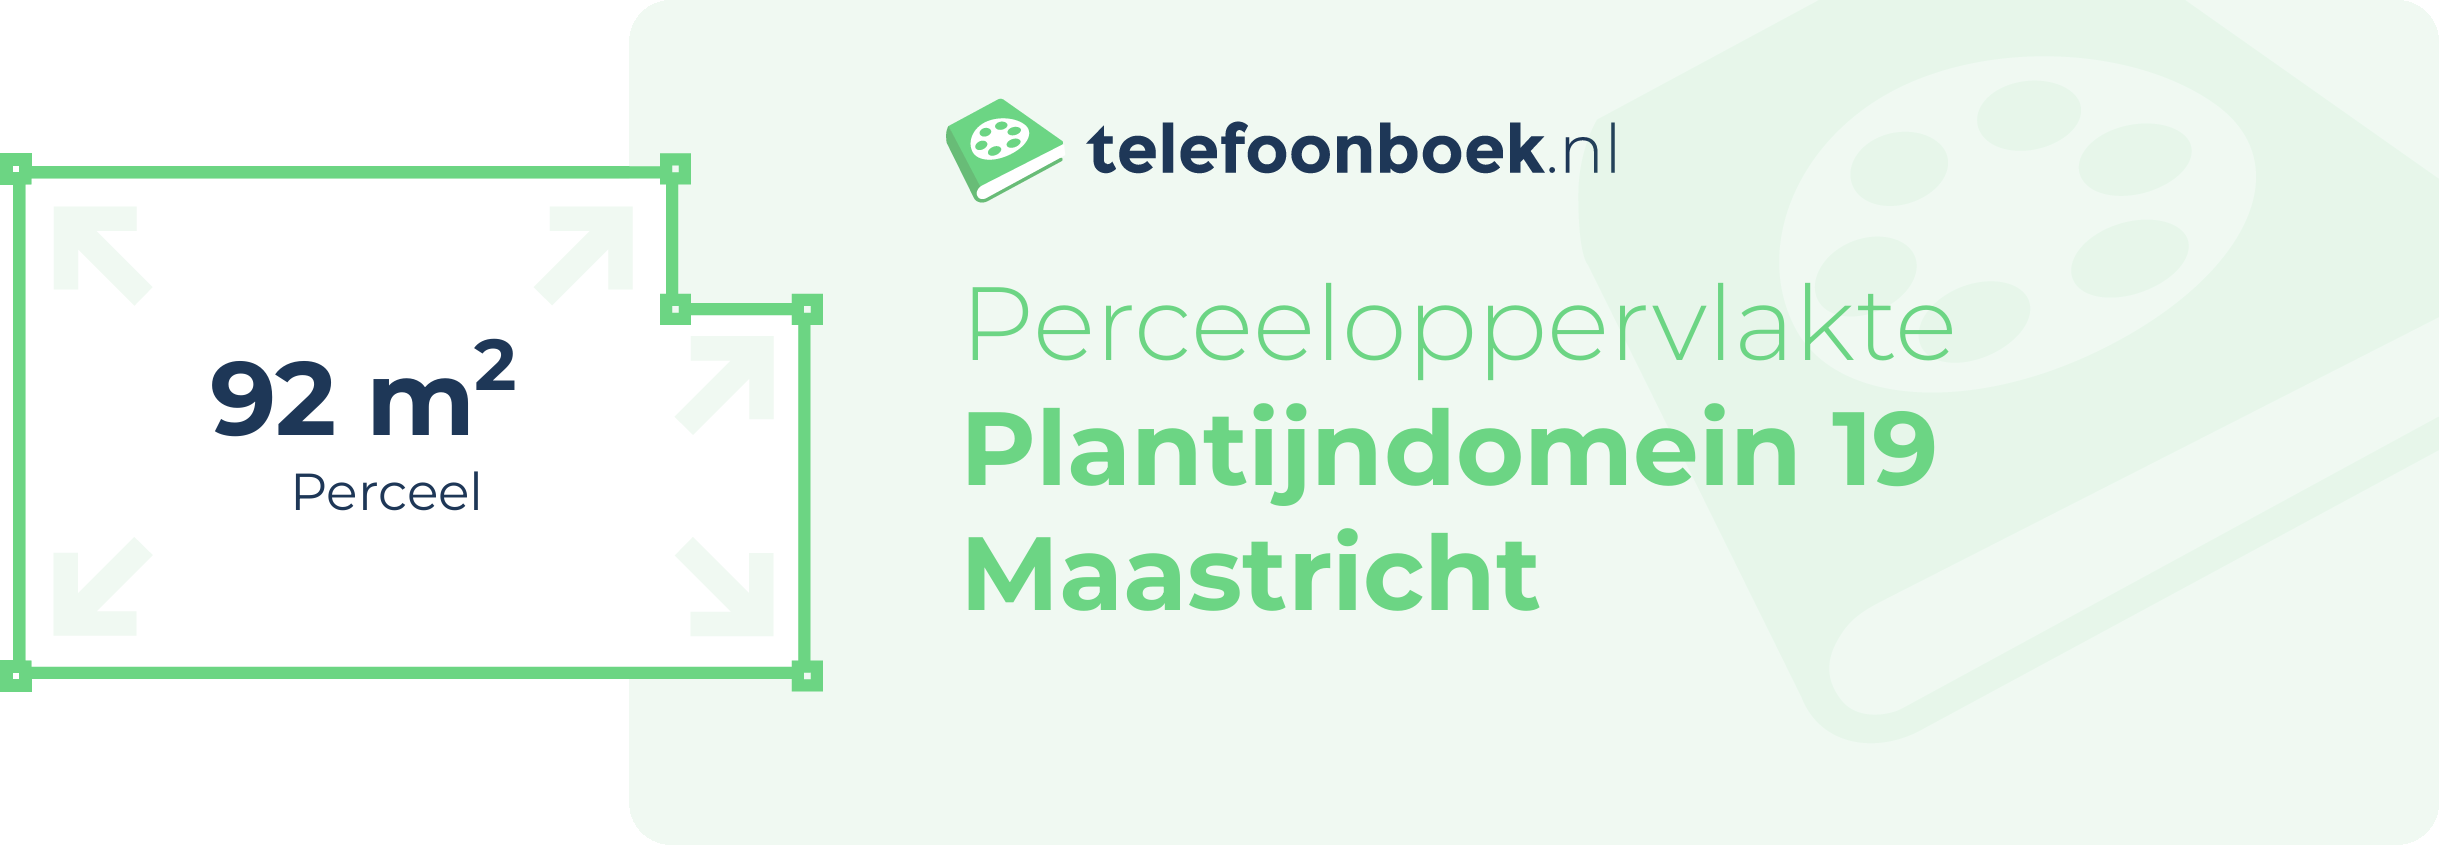 Perceeloppervlakte Plantijndomein 19 Maastricht